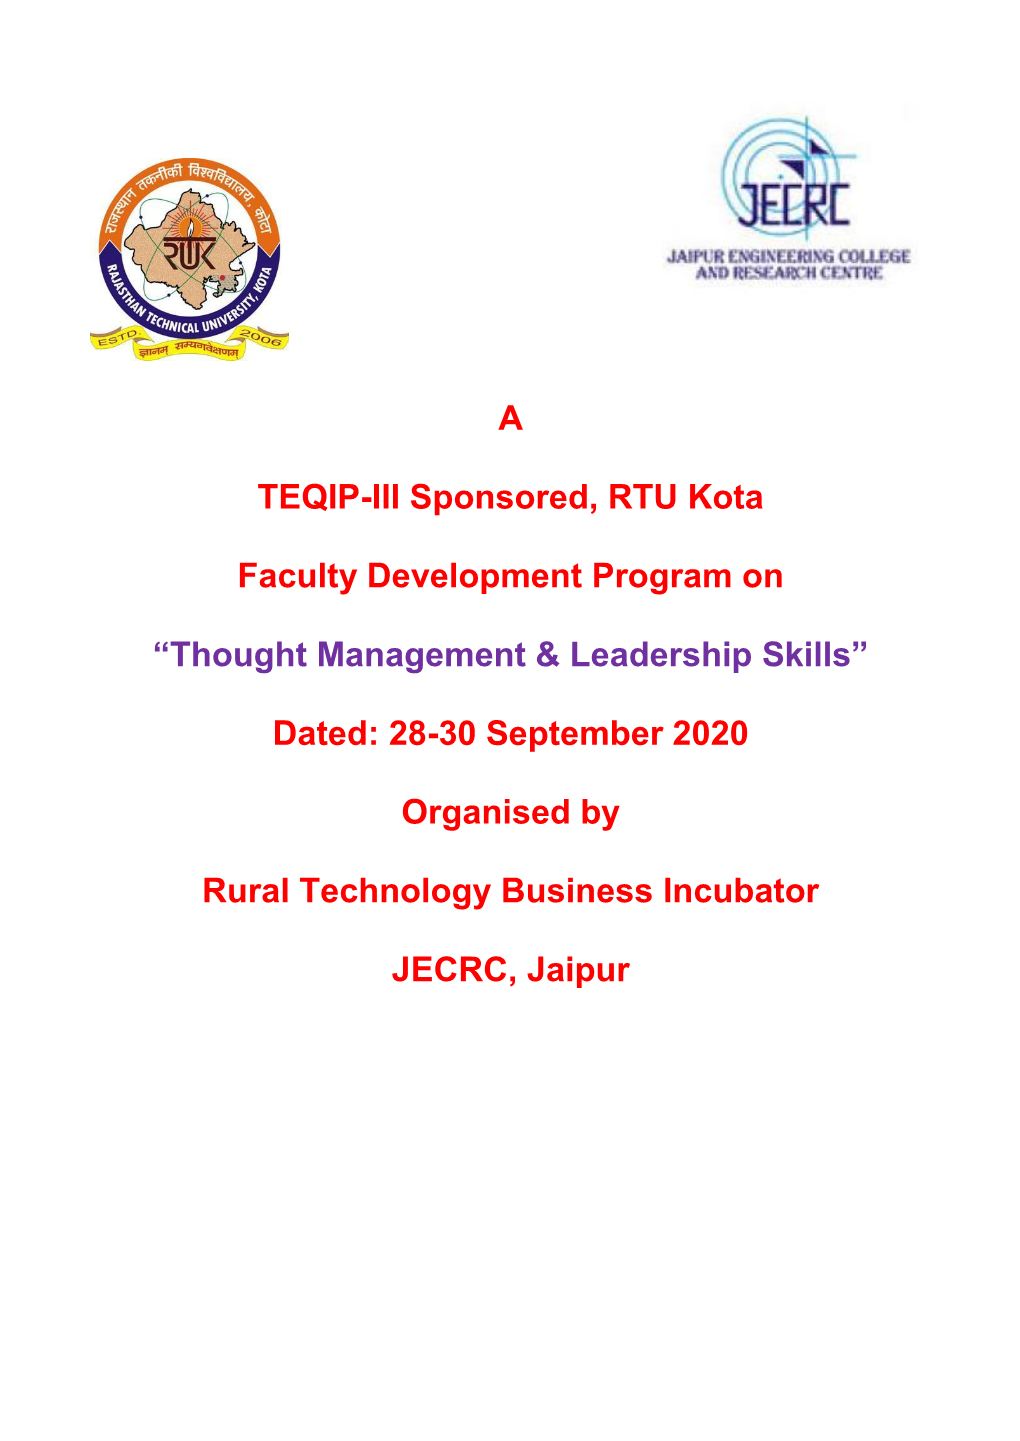 A TEQIP-III Sponsored, RTU Kota Faculty Development Program On